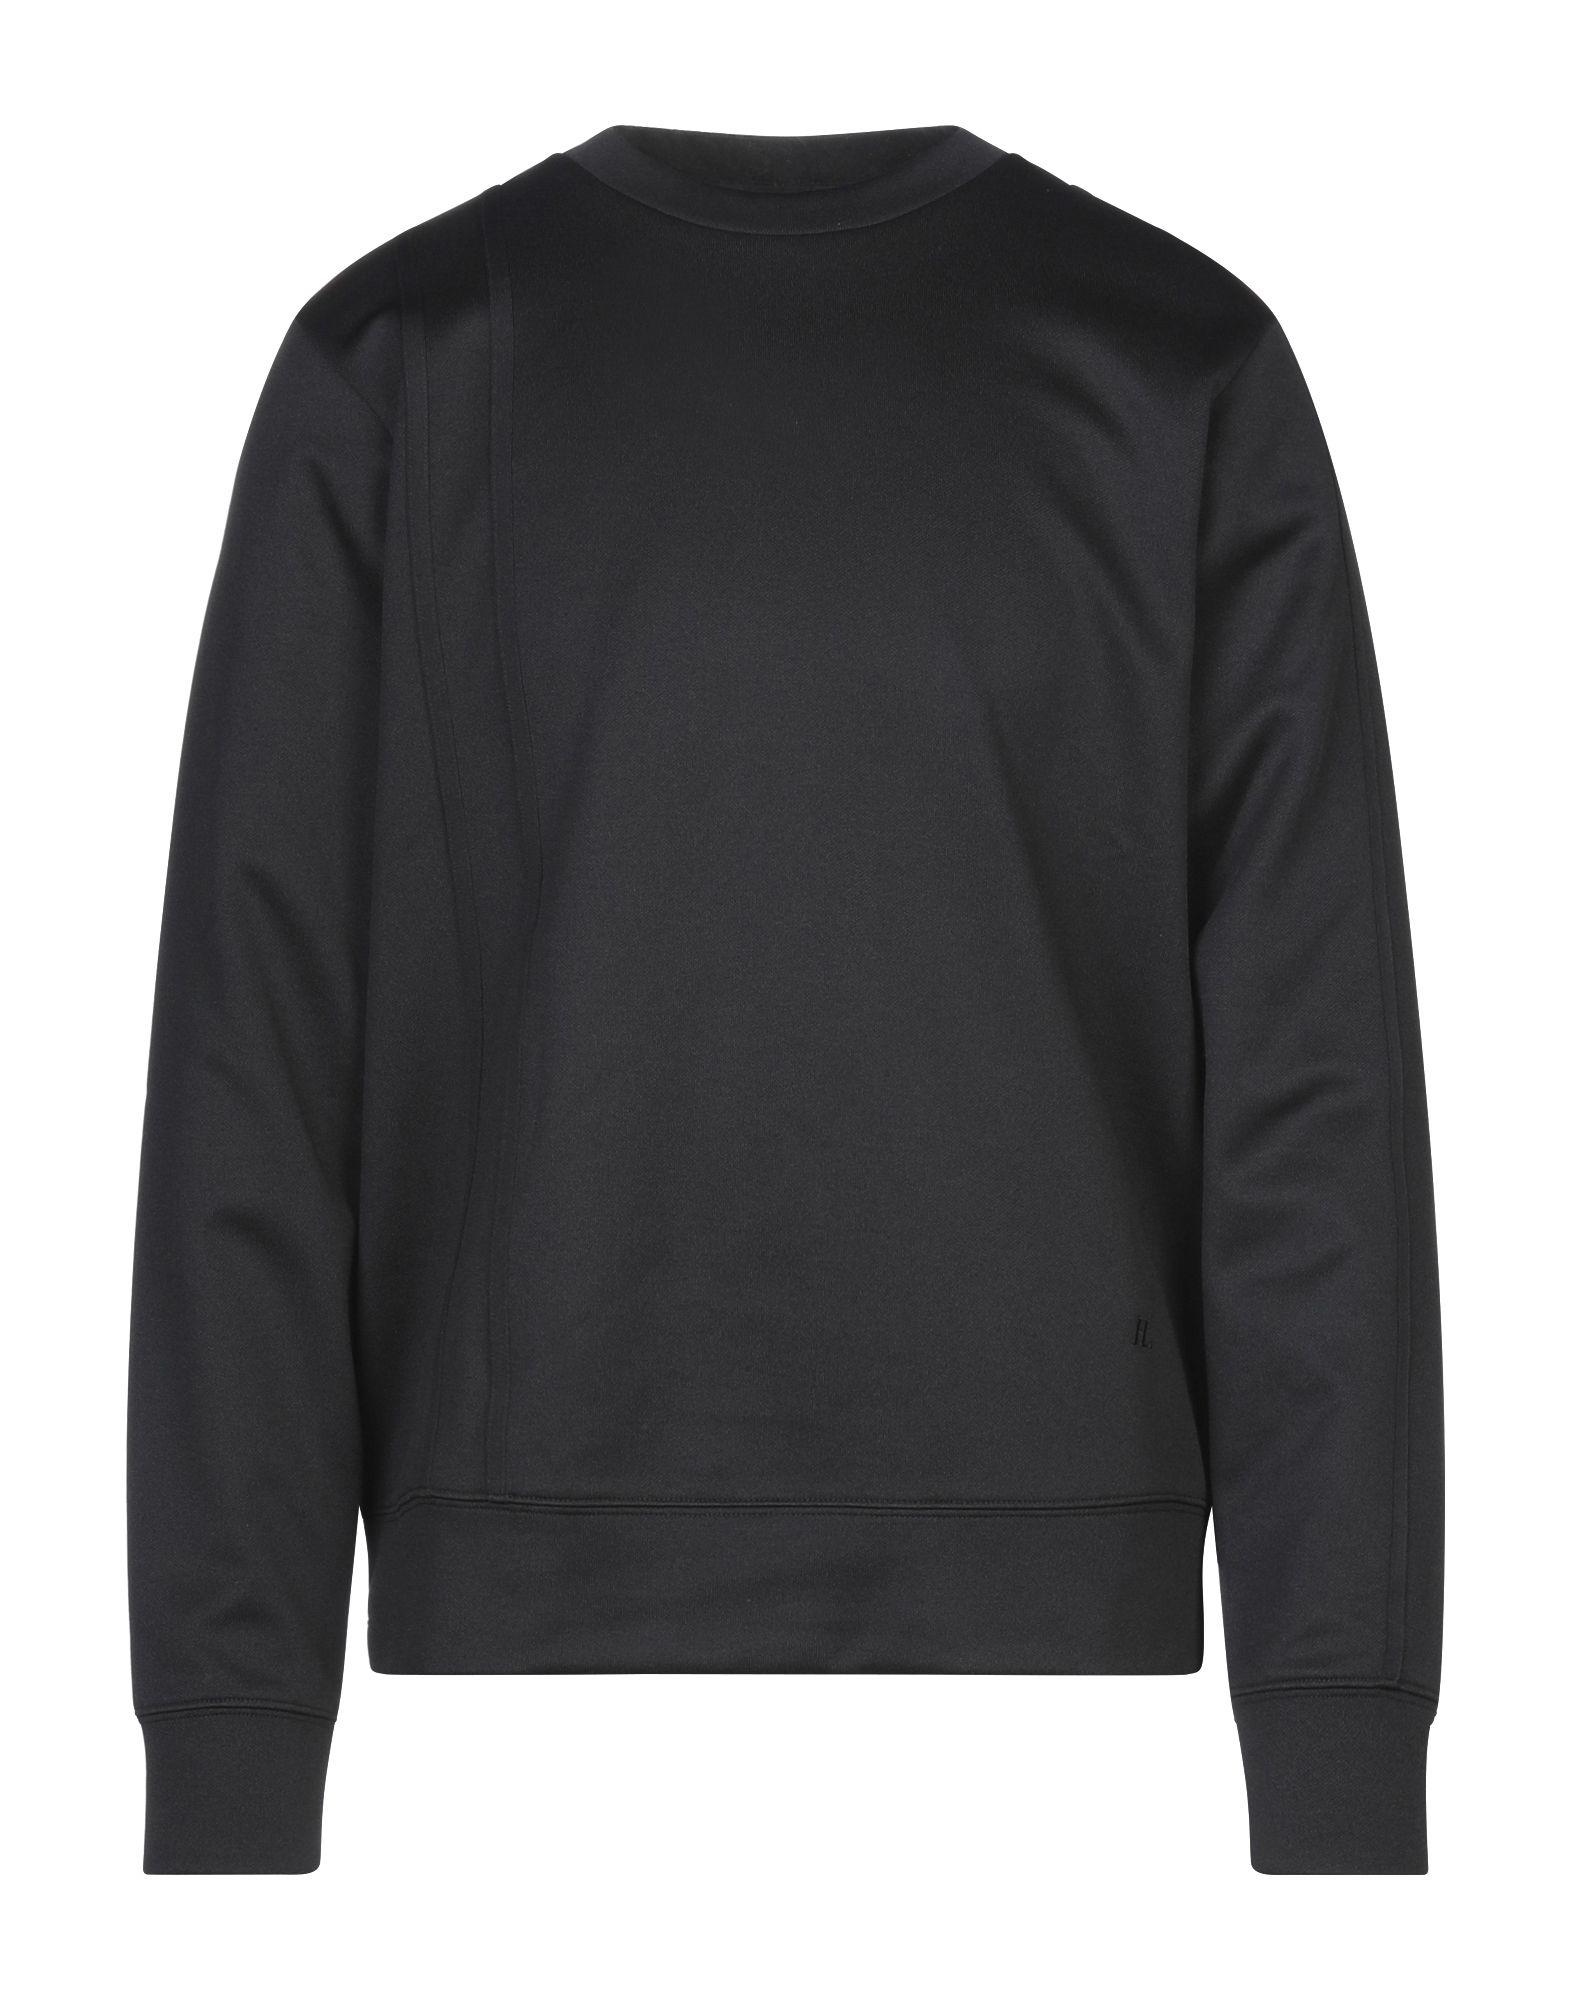 Helmut Lang Synthetic Sweatshirt in Black for Men - Lyst